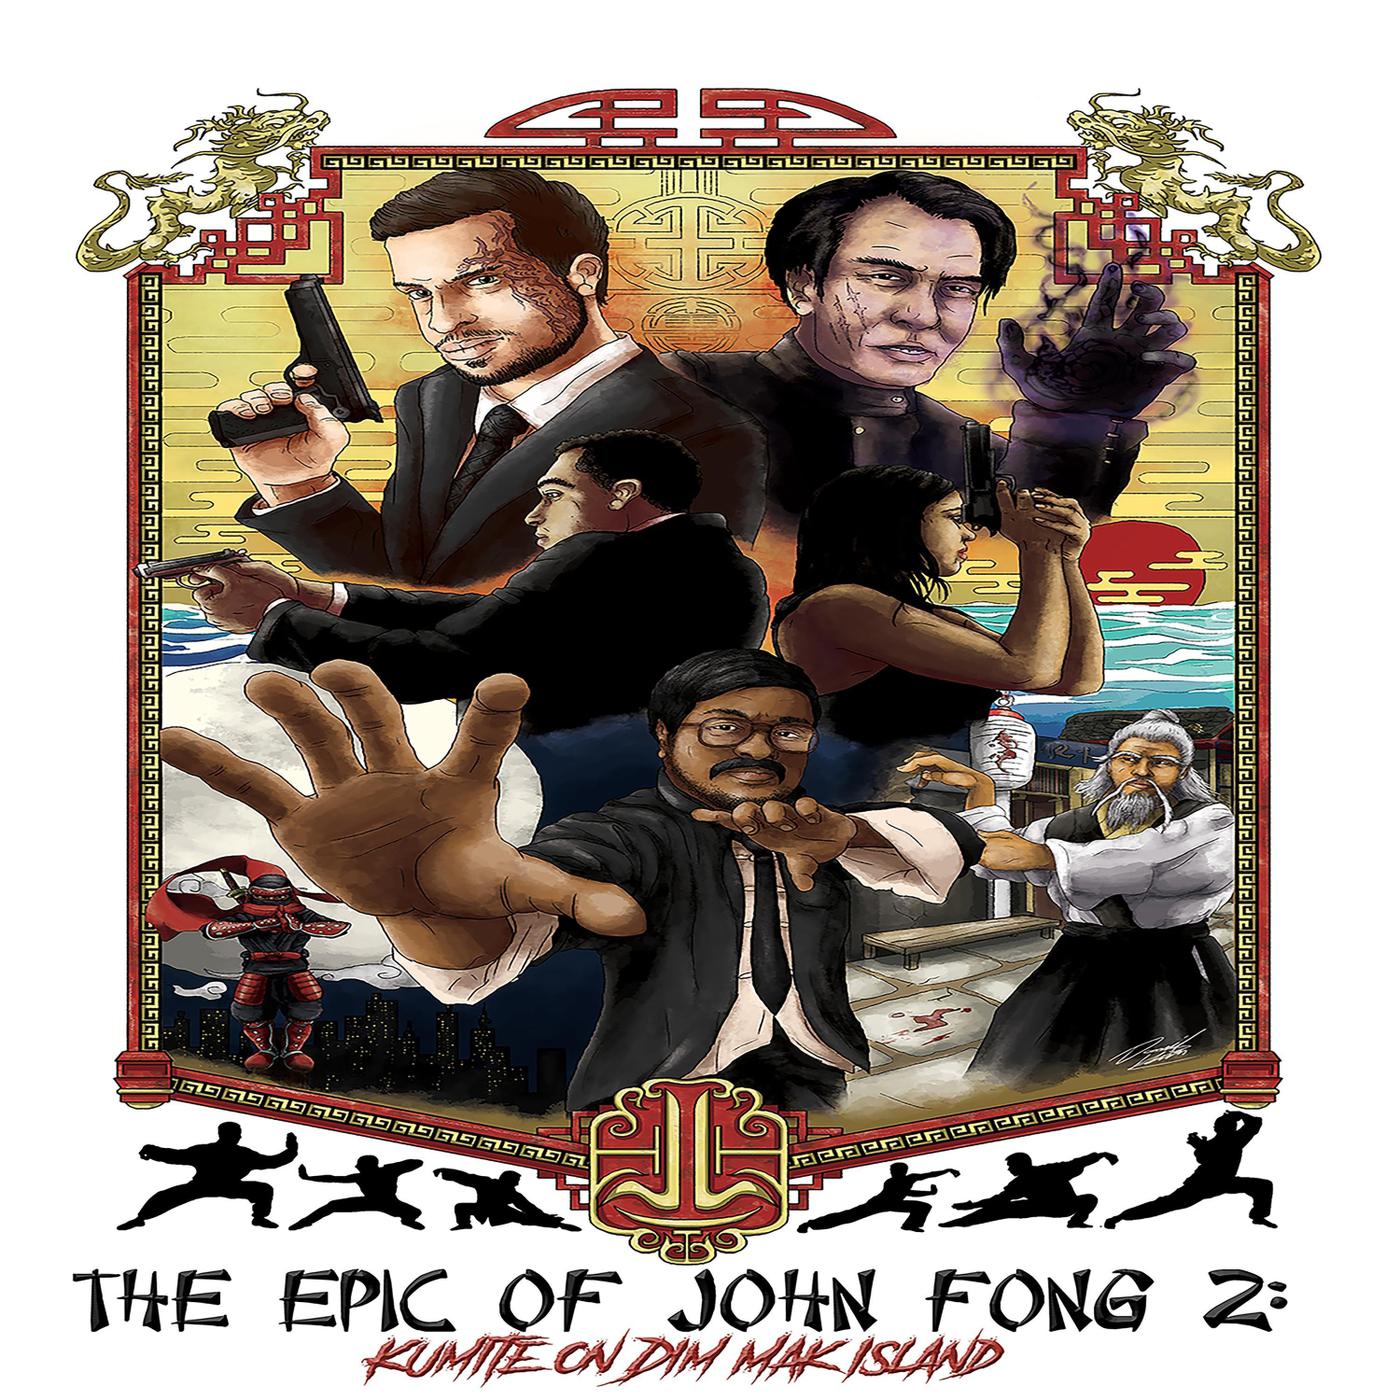 The Epic of John Fong 2: Kumite on Dim Mak Island